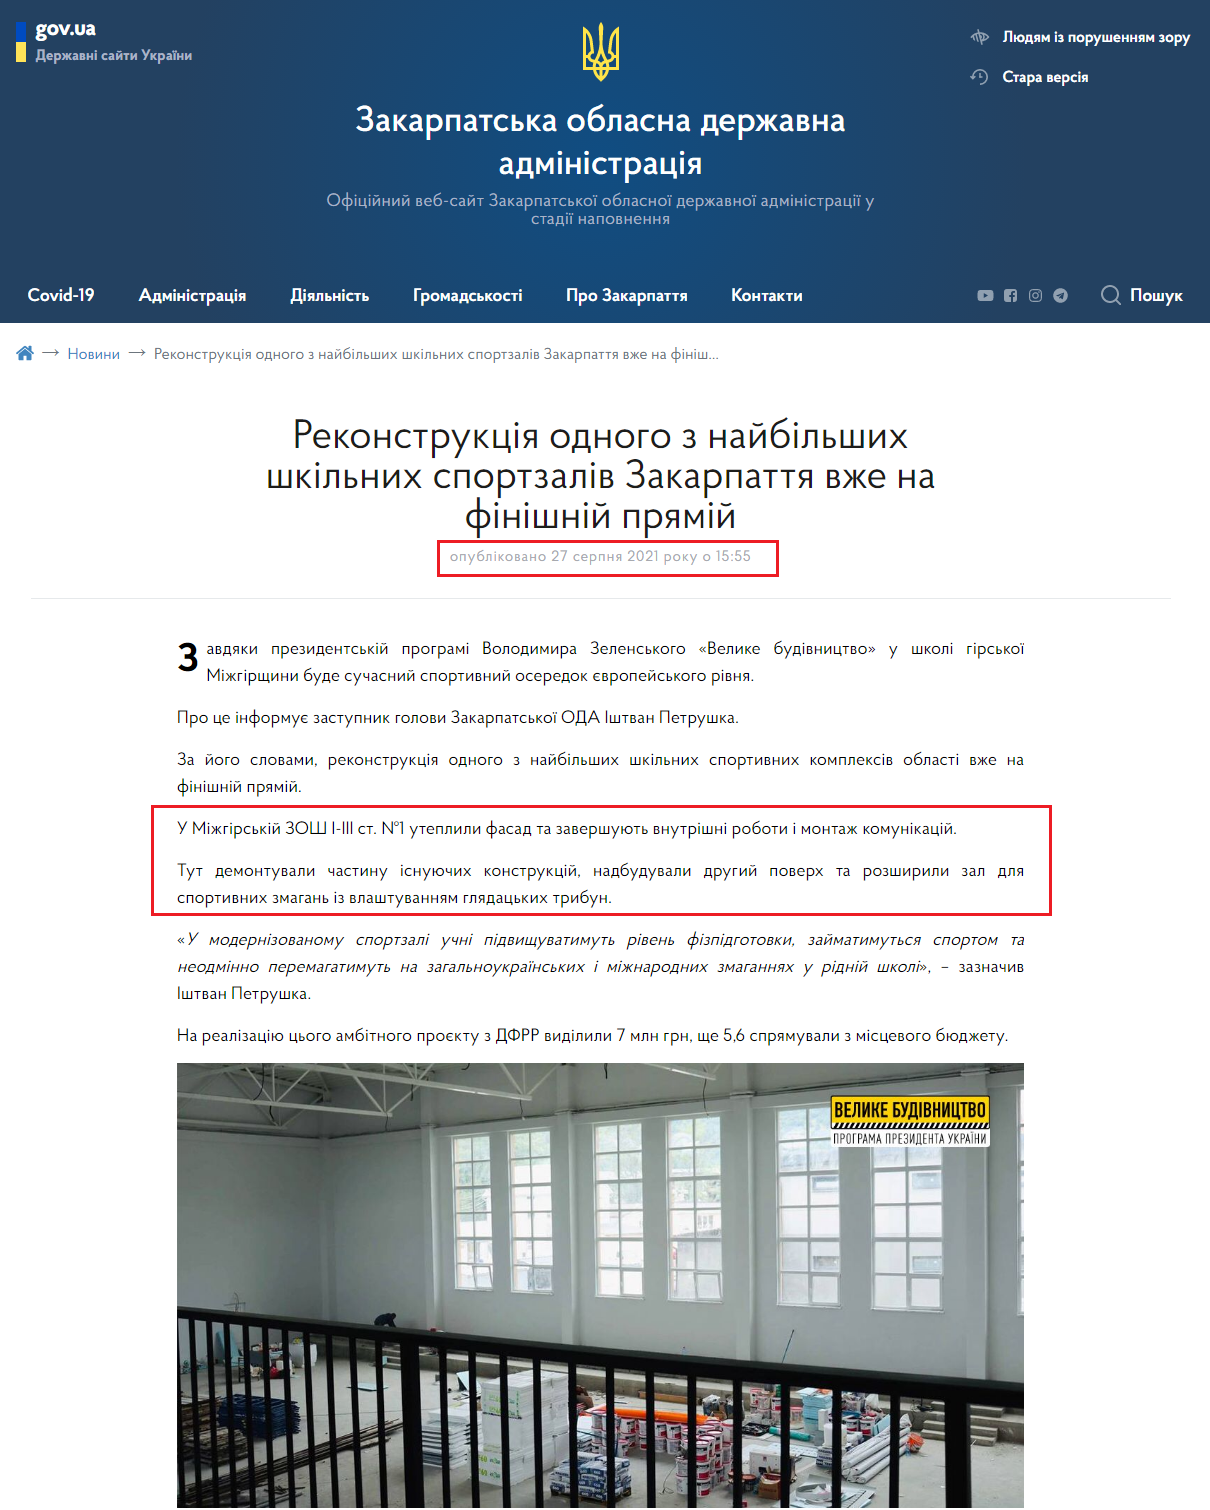 https://carpathia.gov.ua/news/rekonstrukciya-odnogo-z-najbilshih-shkilnih-sportzaliv-zakarpattya-vzhe-na-finishnij-pryamij